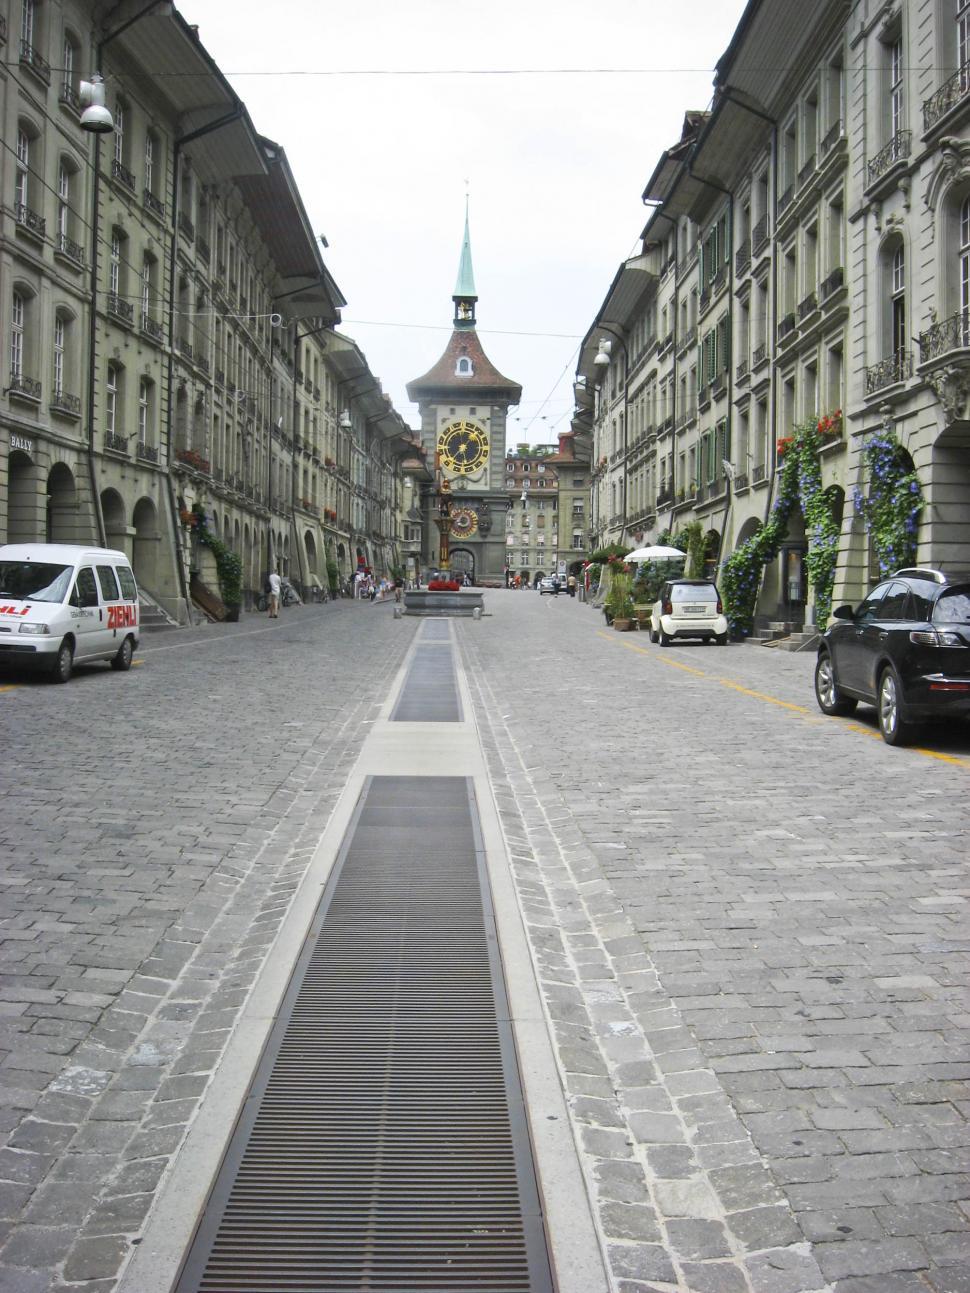 Download Free Stock Photo of Clock in Bern, Switzerland 